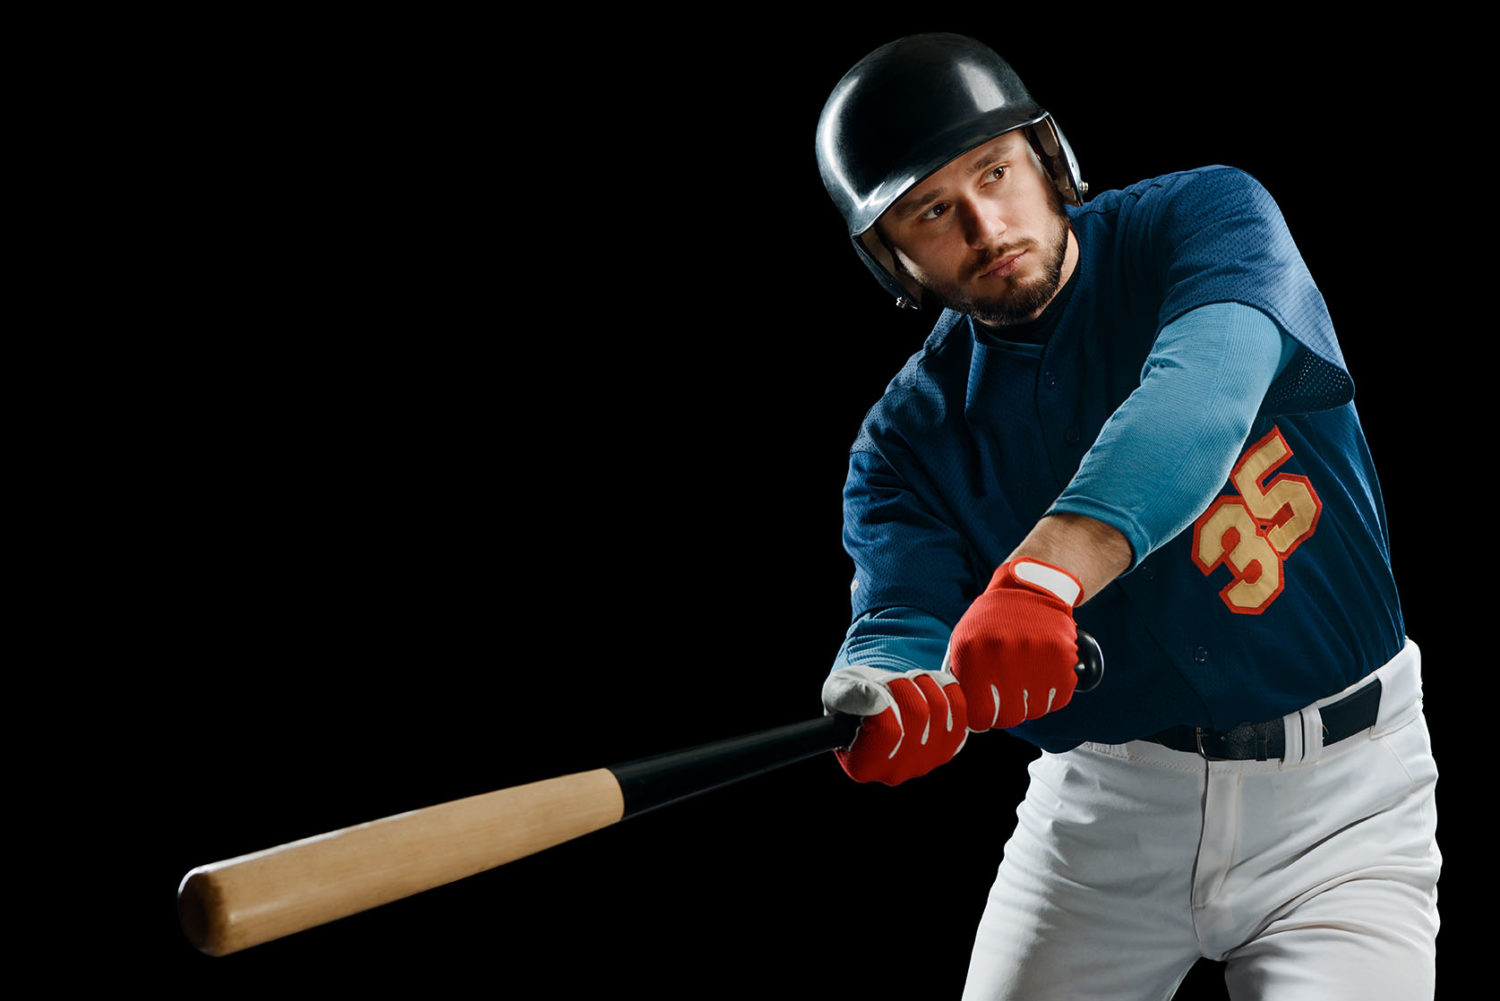 Baseball player swinging a bat